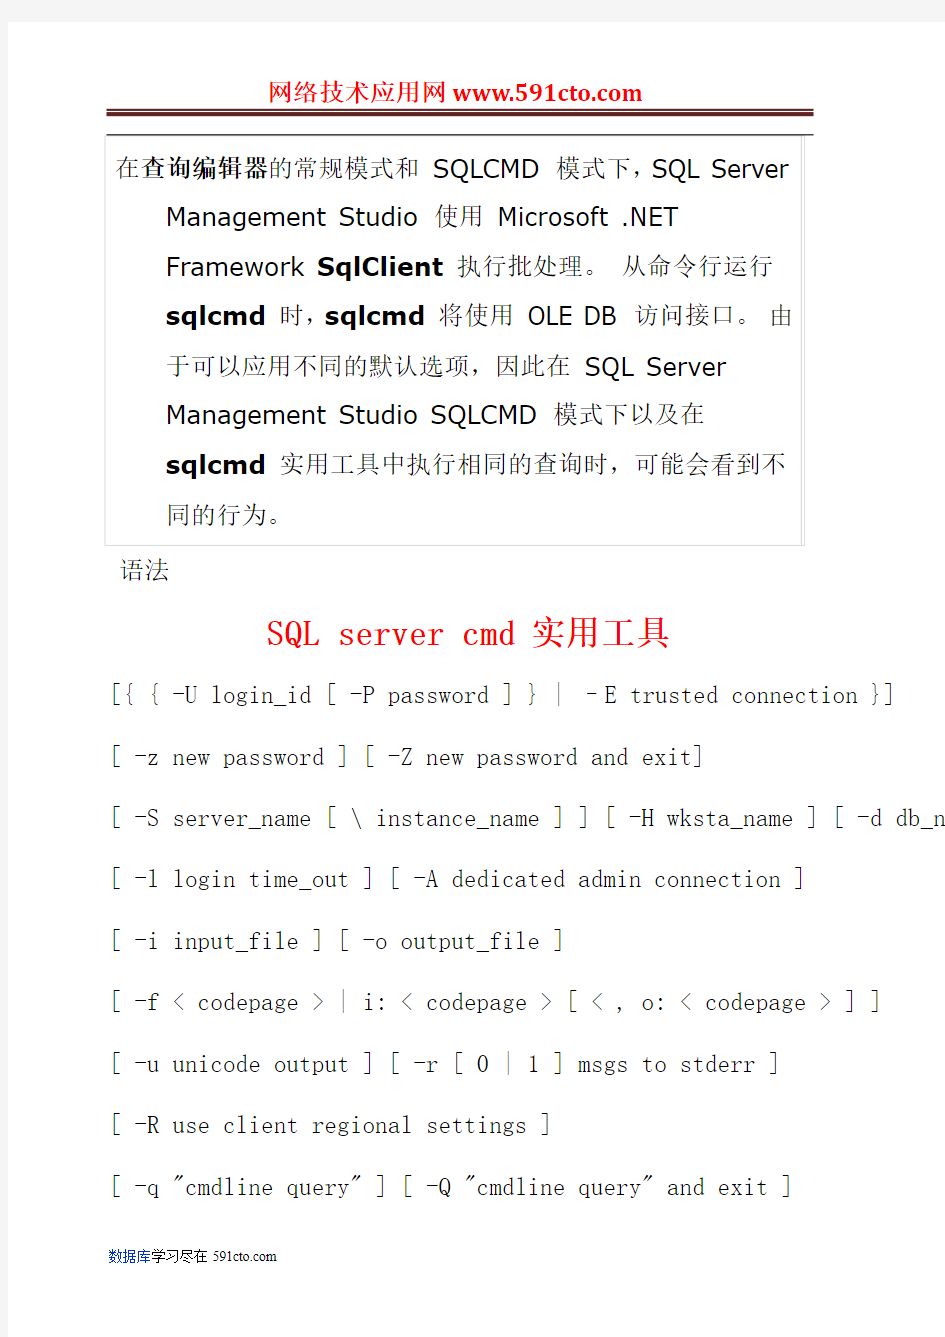 SQL server cmd 实用工具